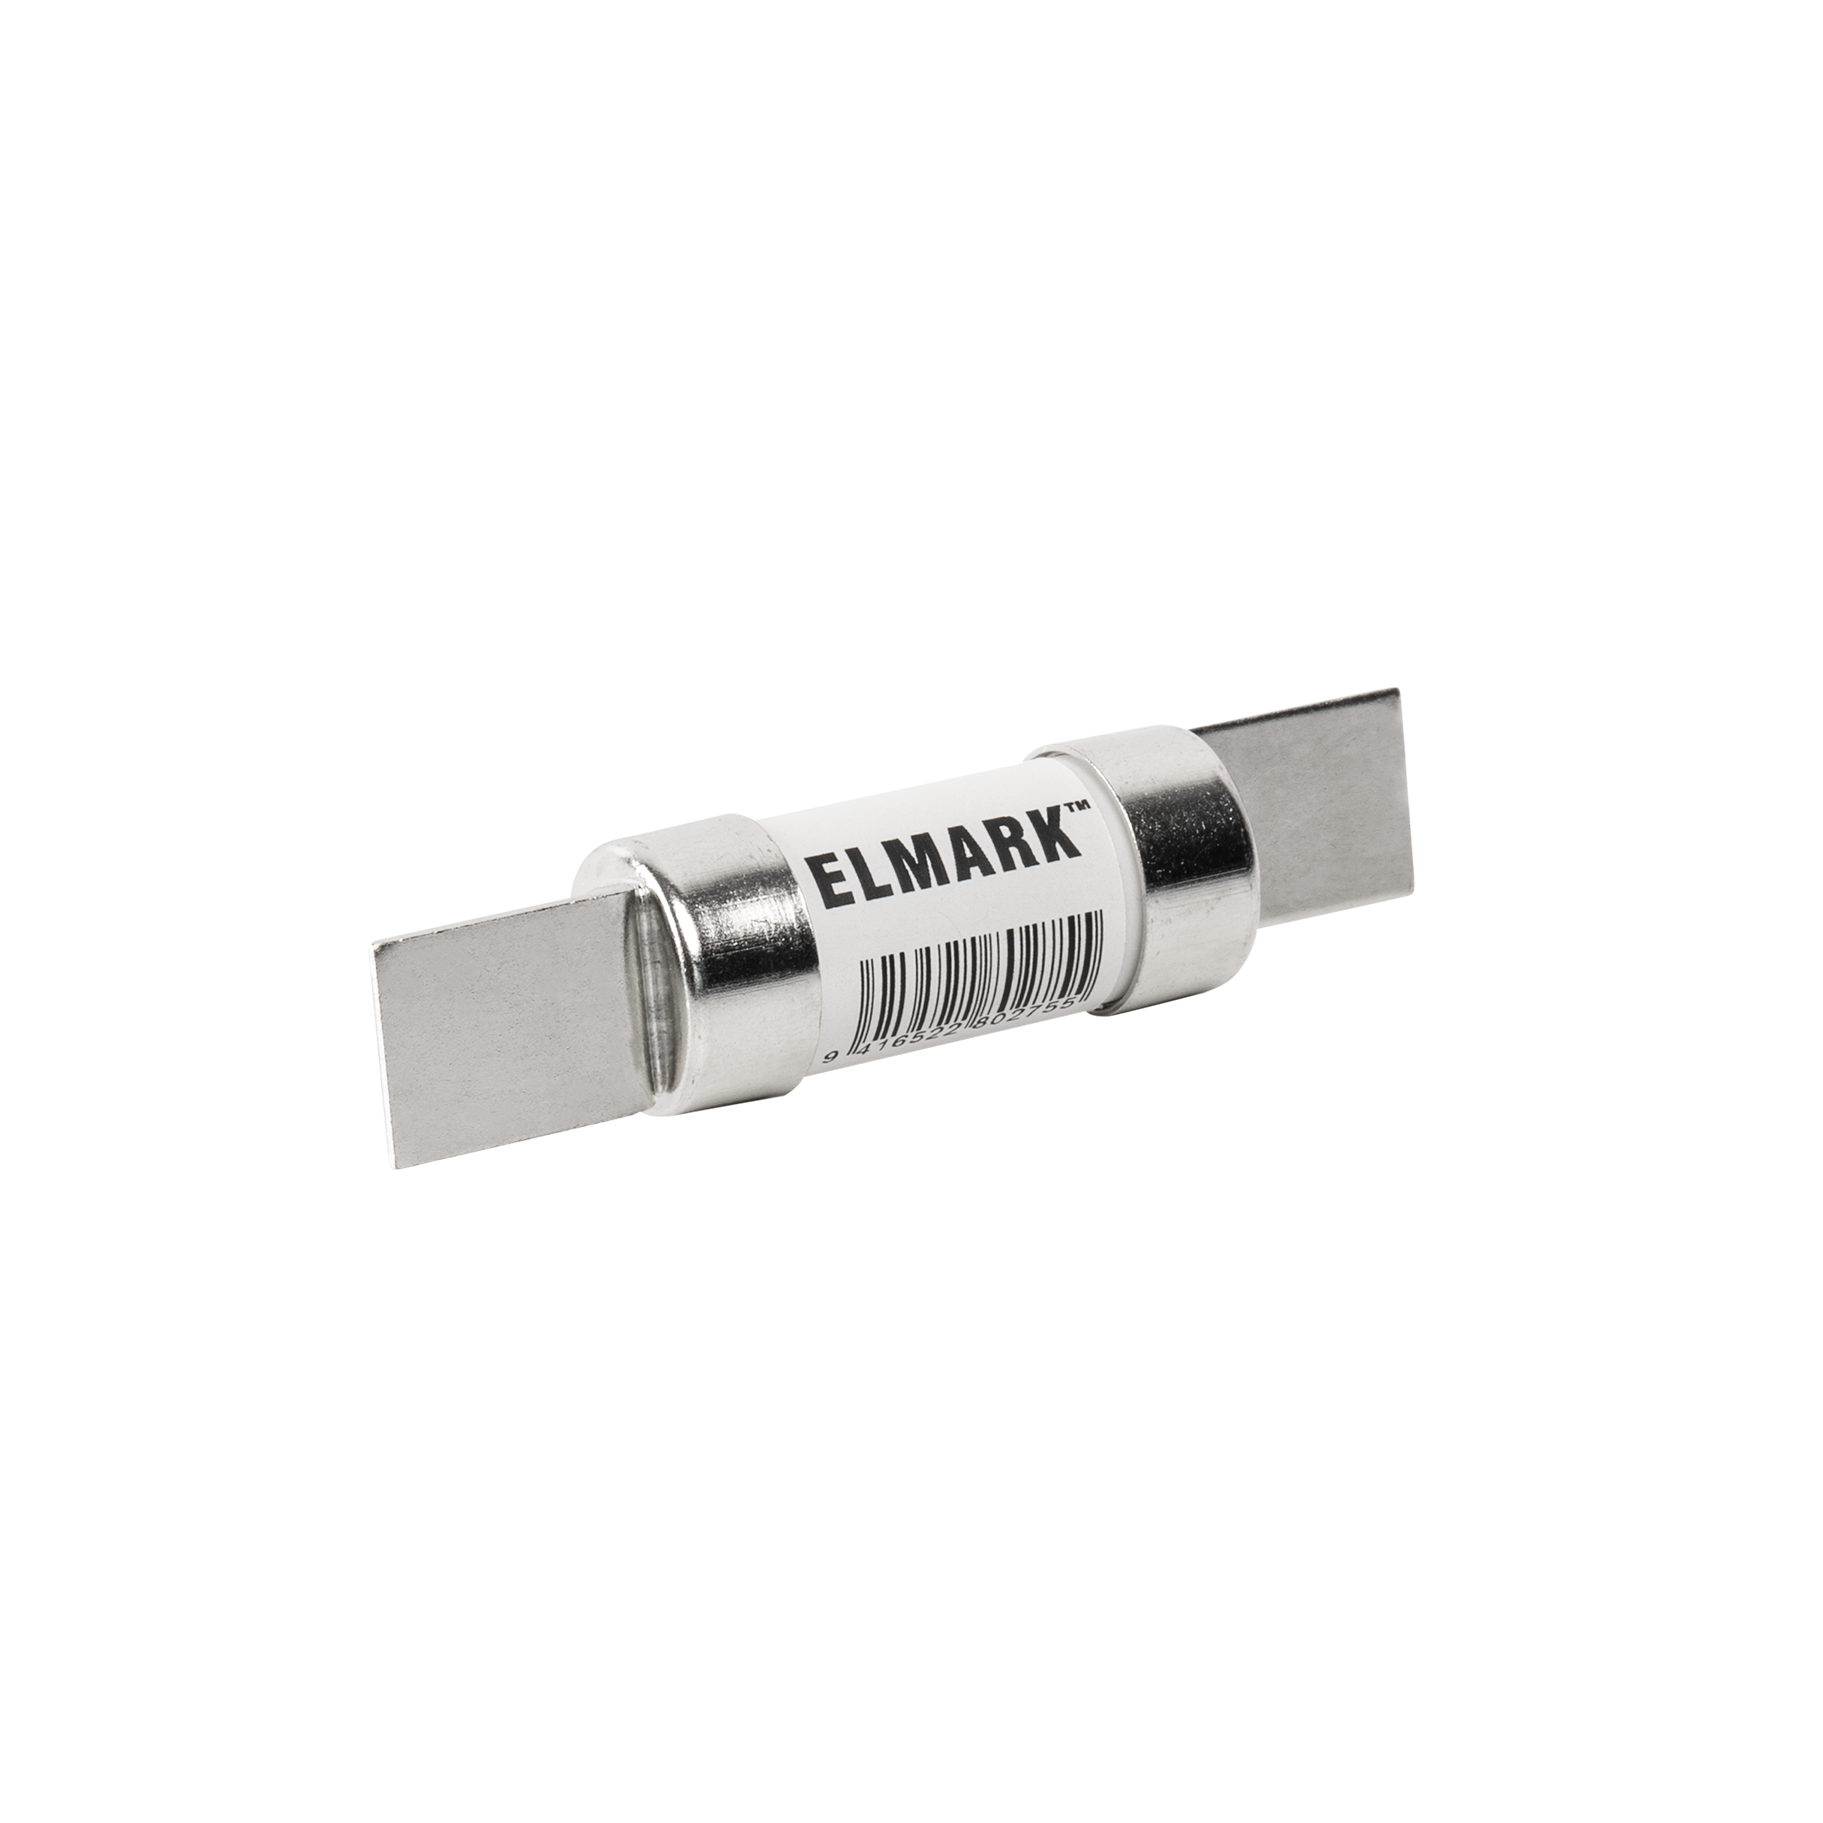 ELMARK HRC FUSE LINK STAGGERED TAG 16A 550V 16G06